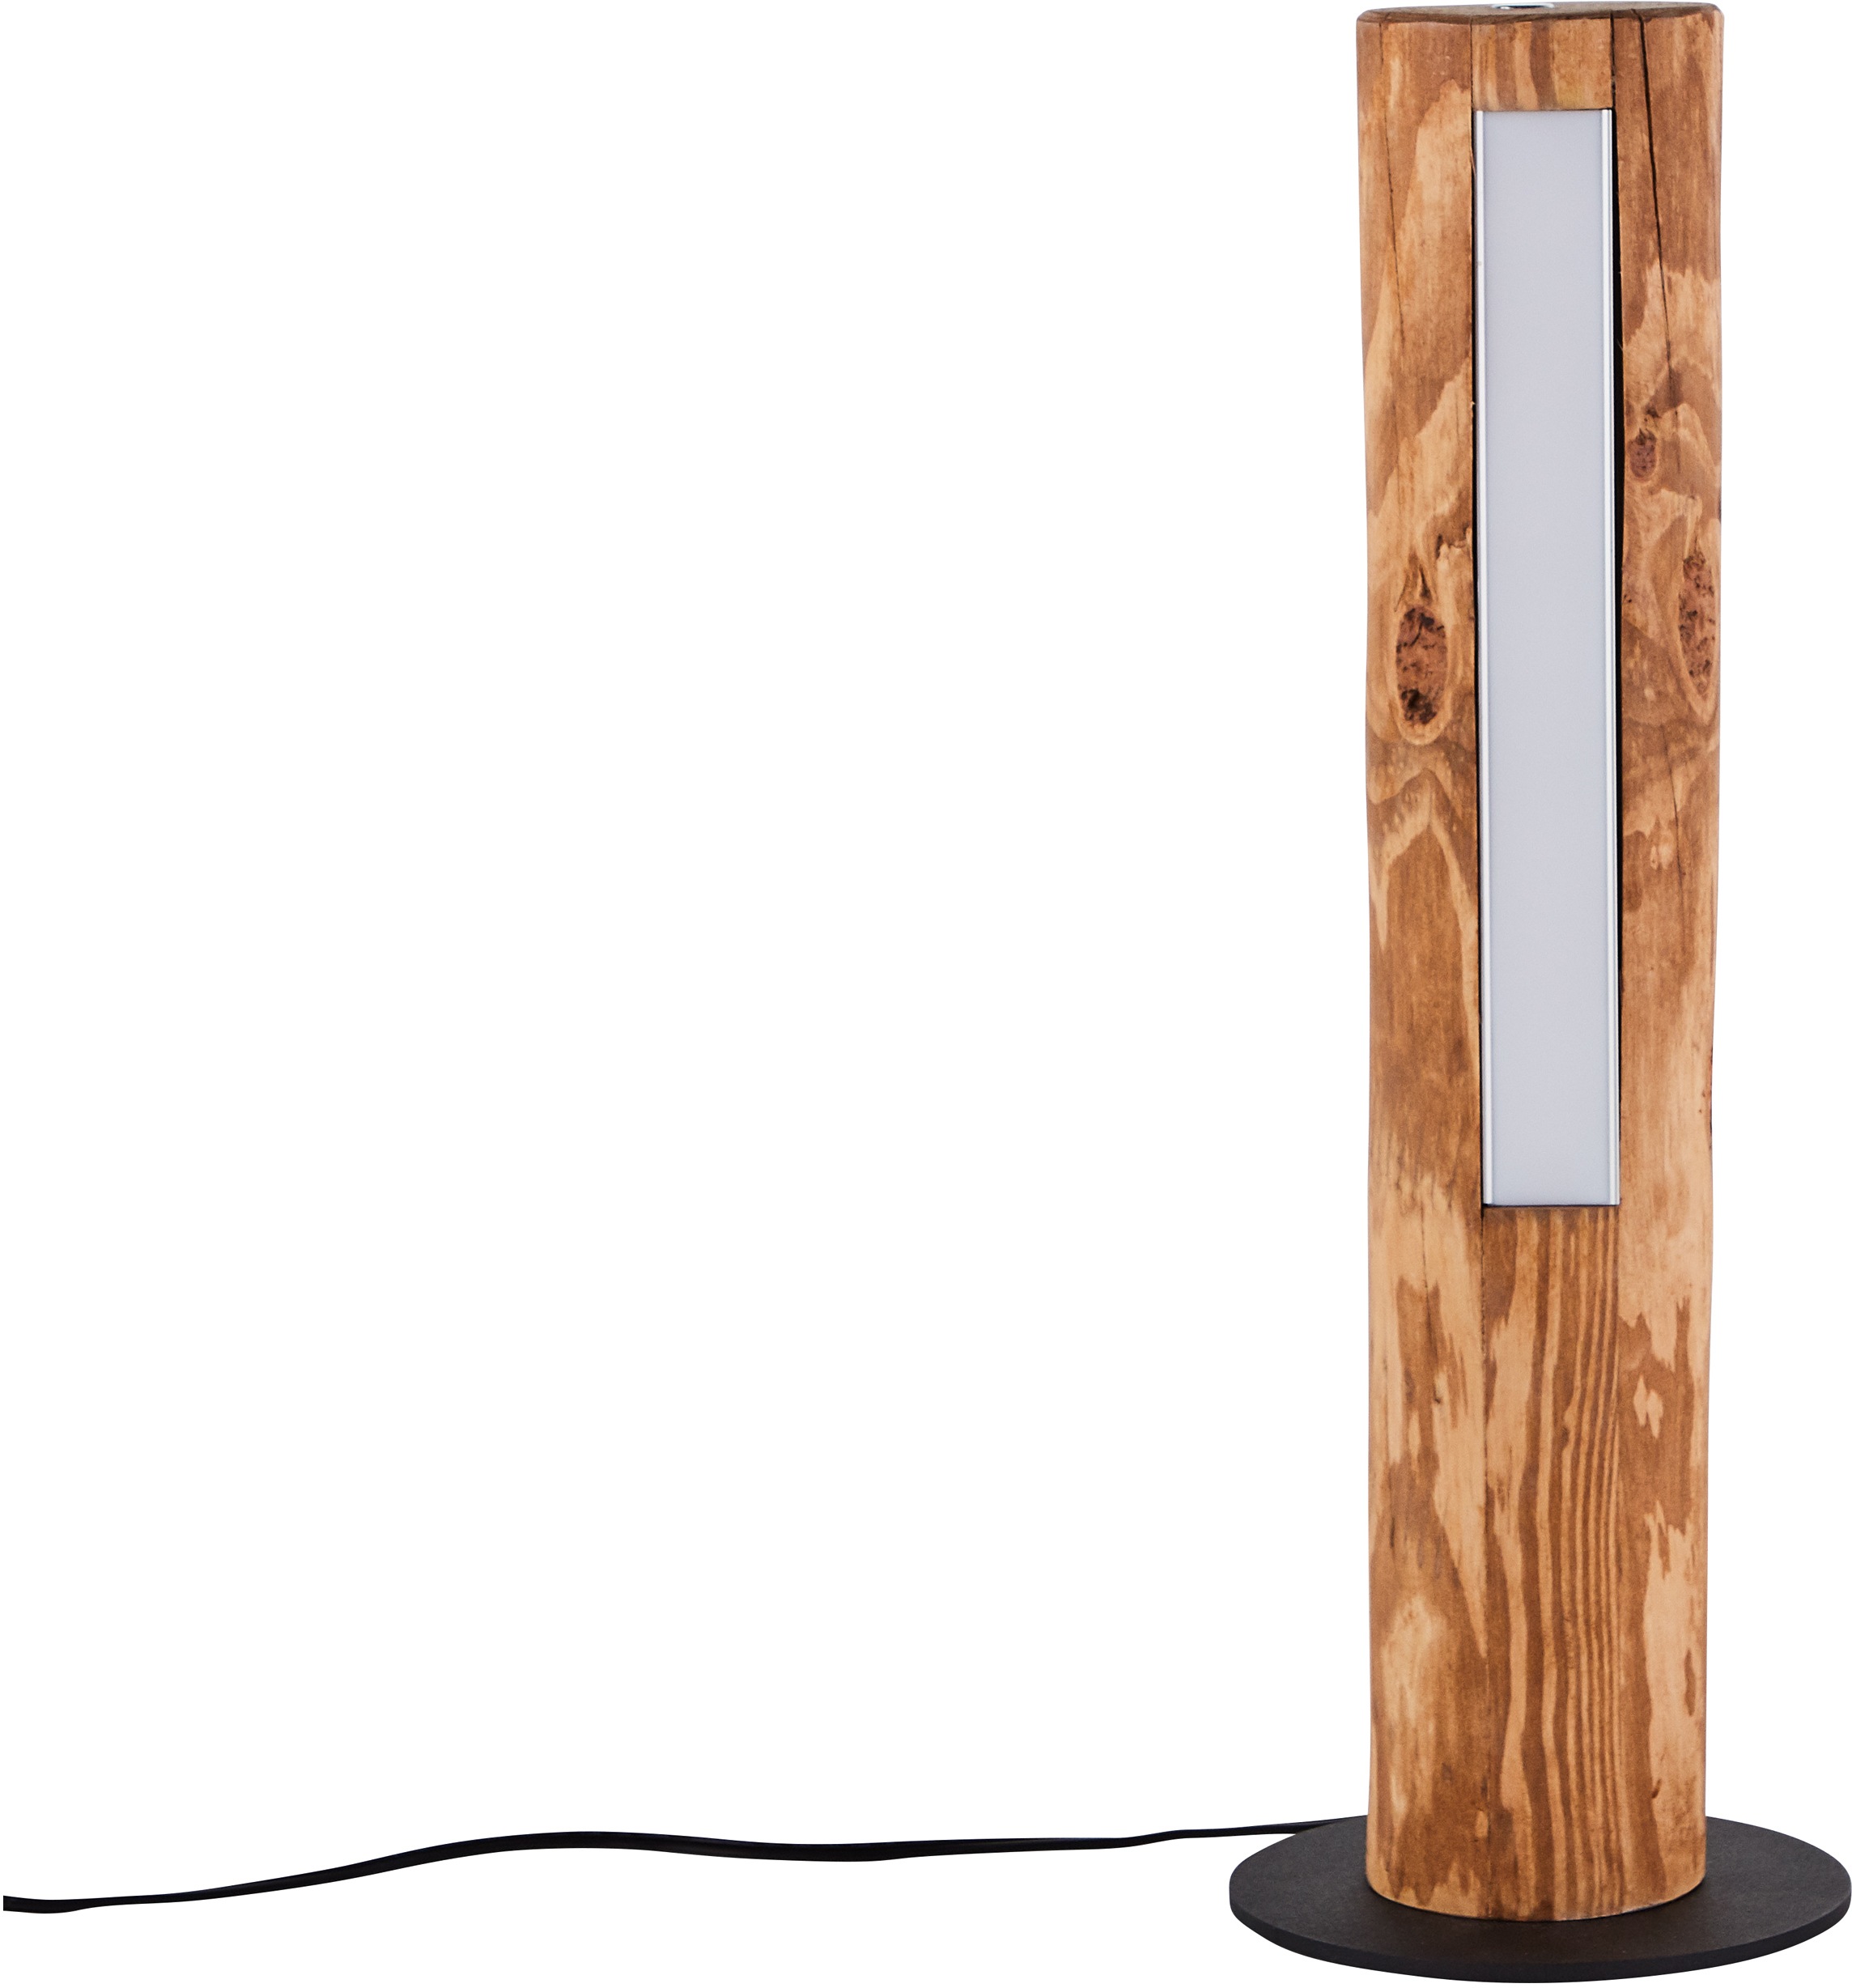 Brilliant LED Tischleuchte »Odun«, 1 flammig, Leuchtmittel LED-Modul | LED fest integriert, 46 cm Höhe, Touchdimmer, 800 lm, warmweiß, Holz/Metall, kiefer gebeizt